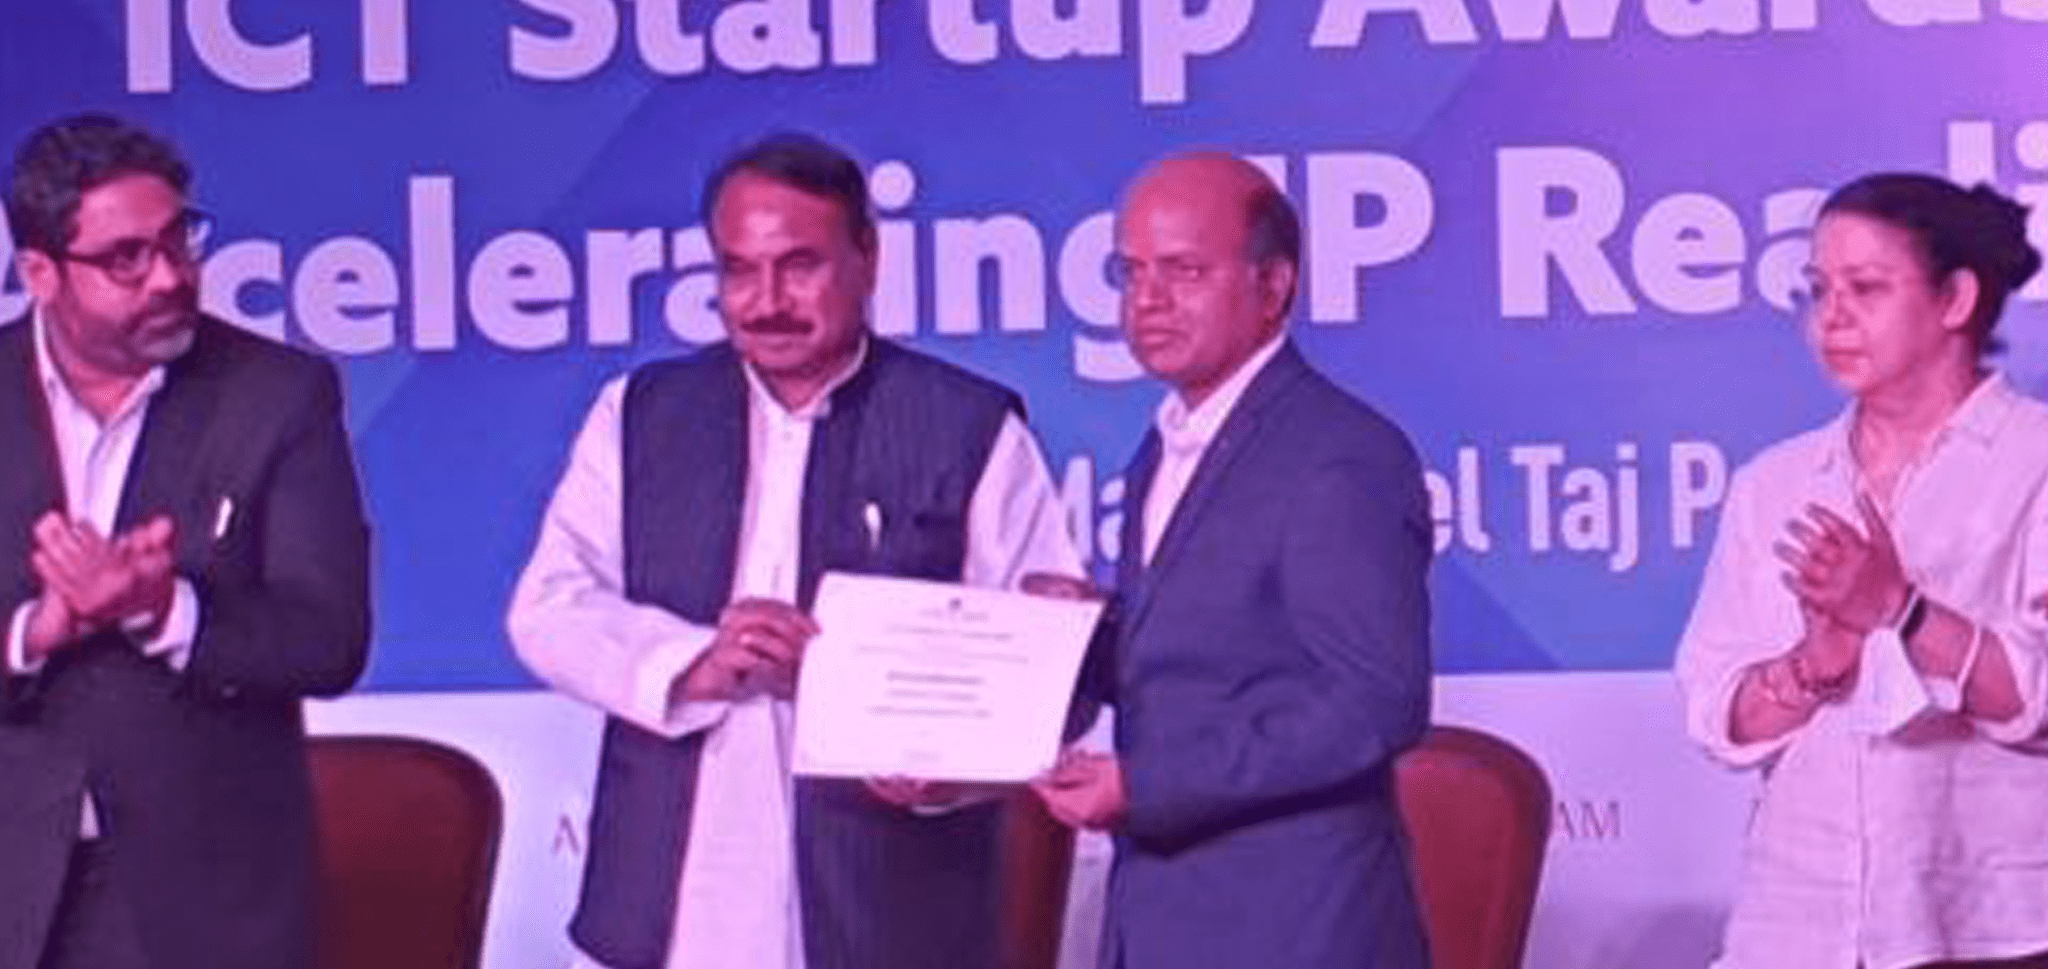 ICT Start-Up award